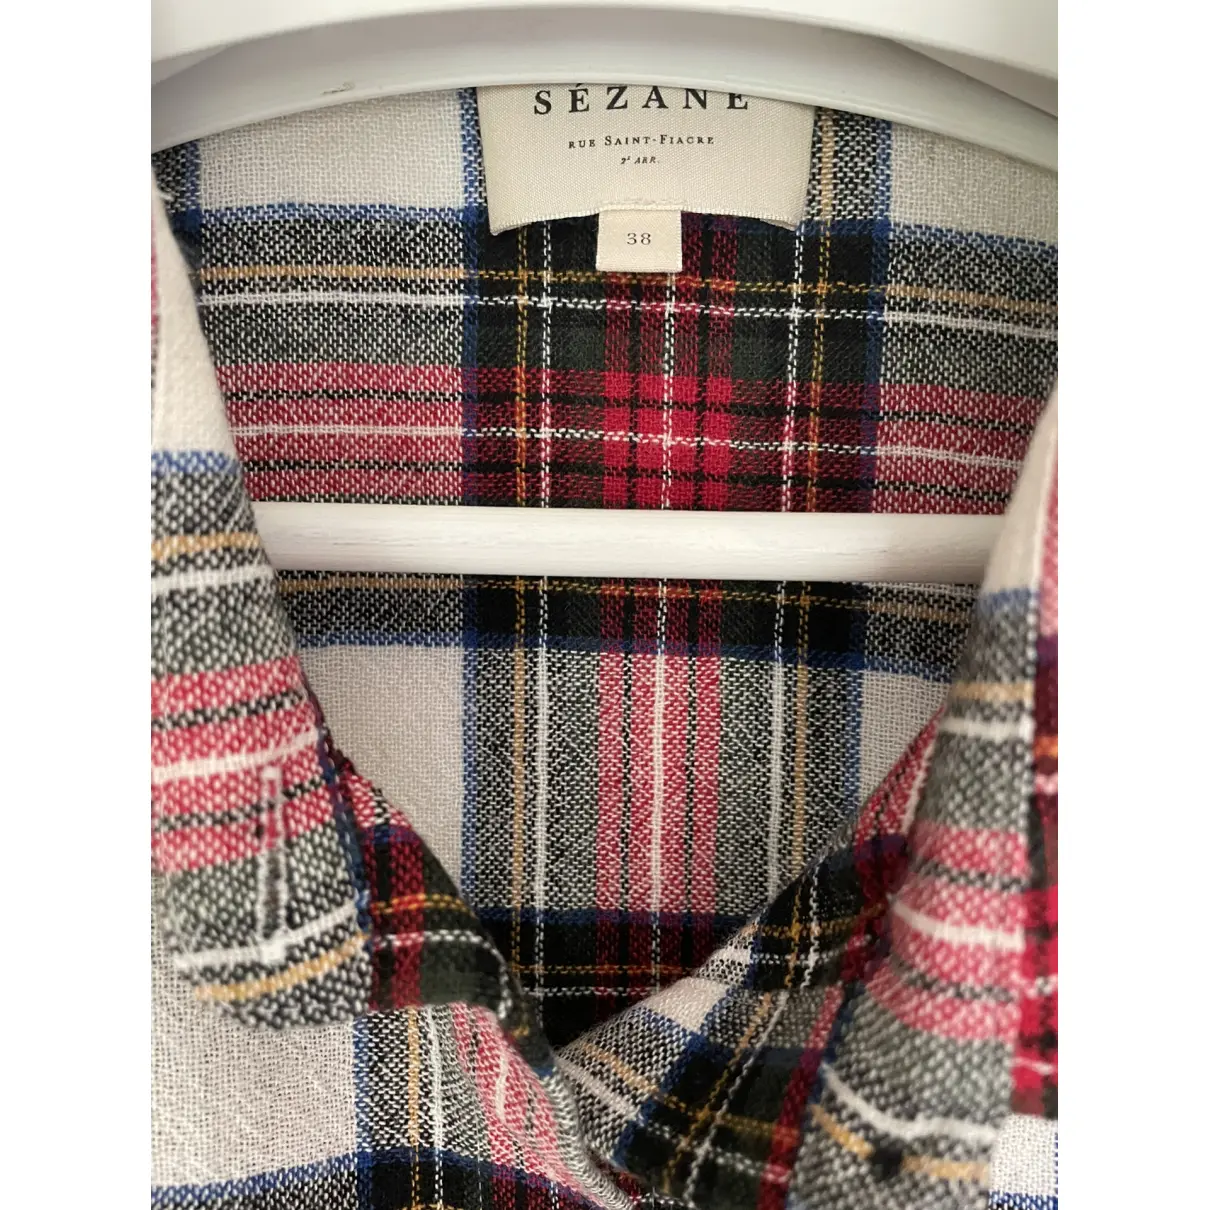 Buy Sézane Wool shirt online